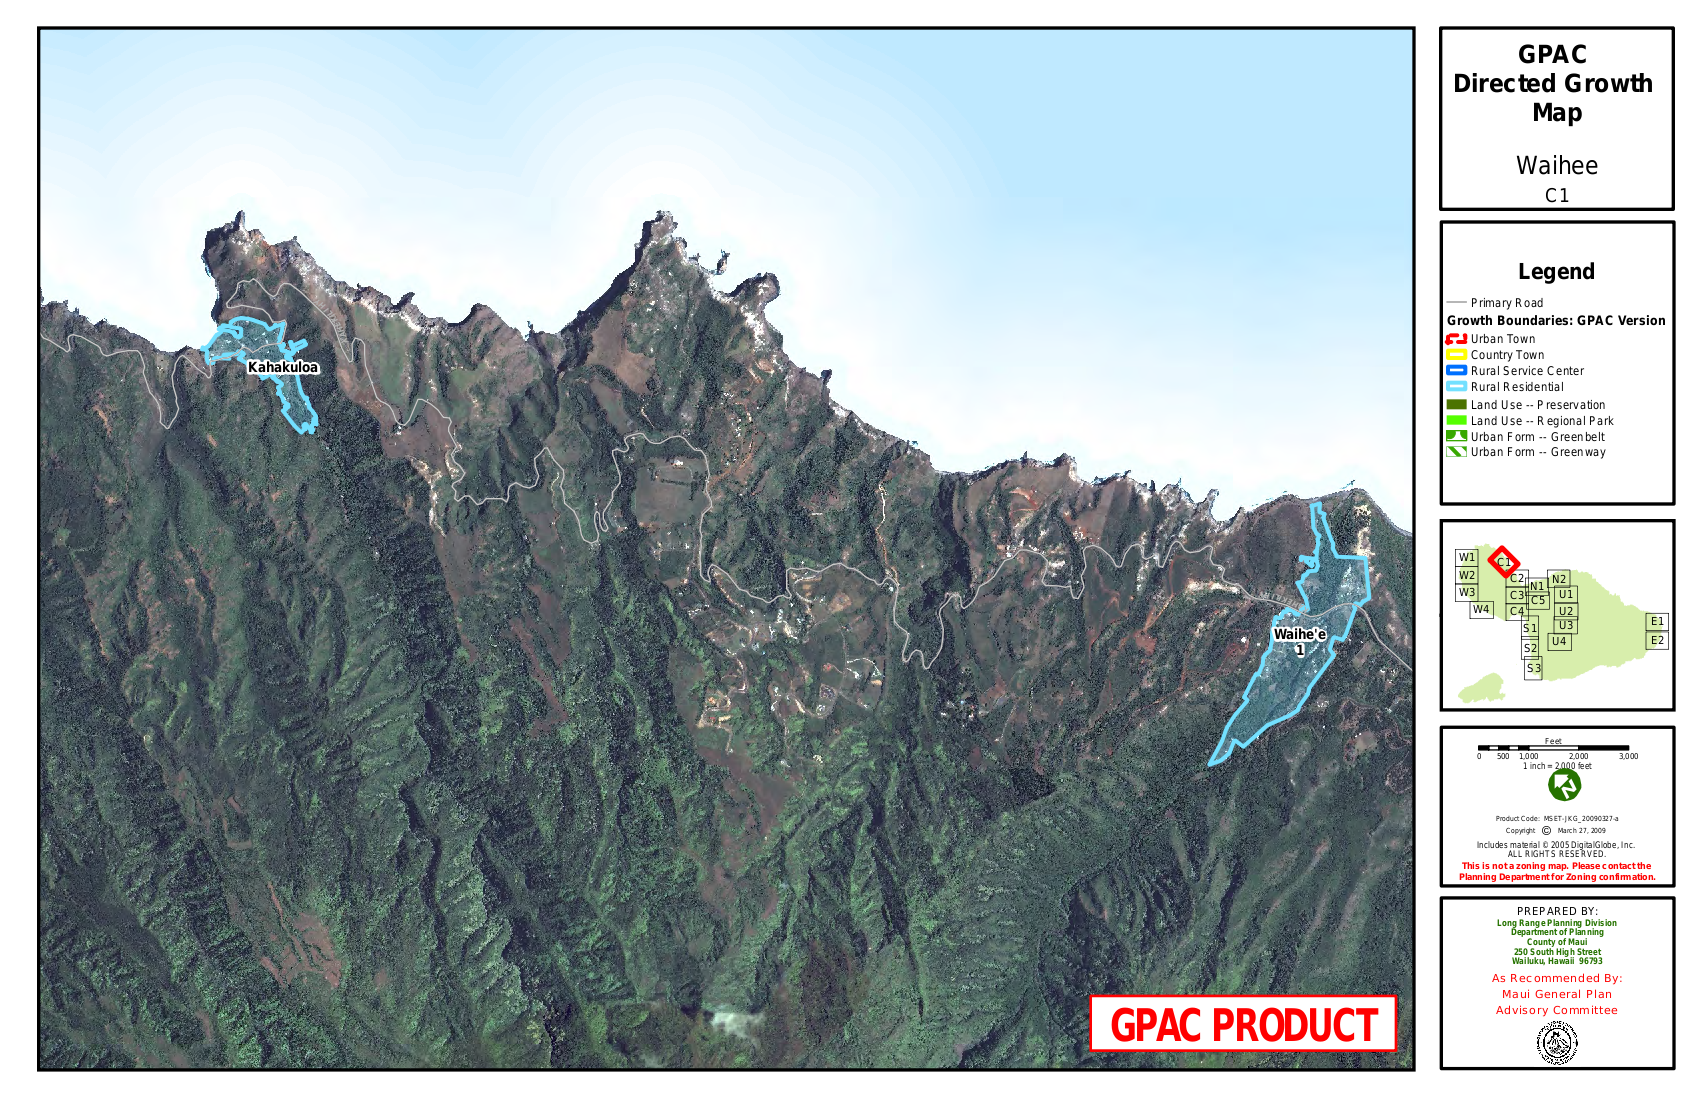 GPAC Directed Growth Map Waihee